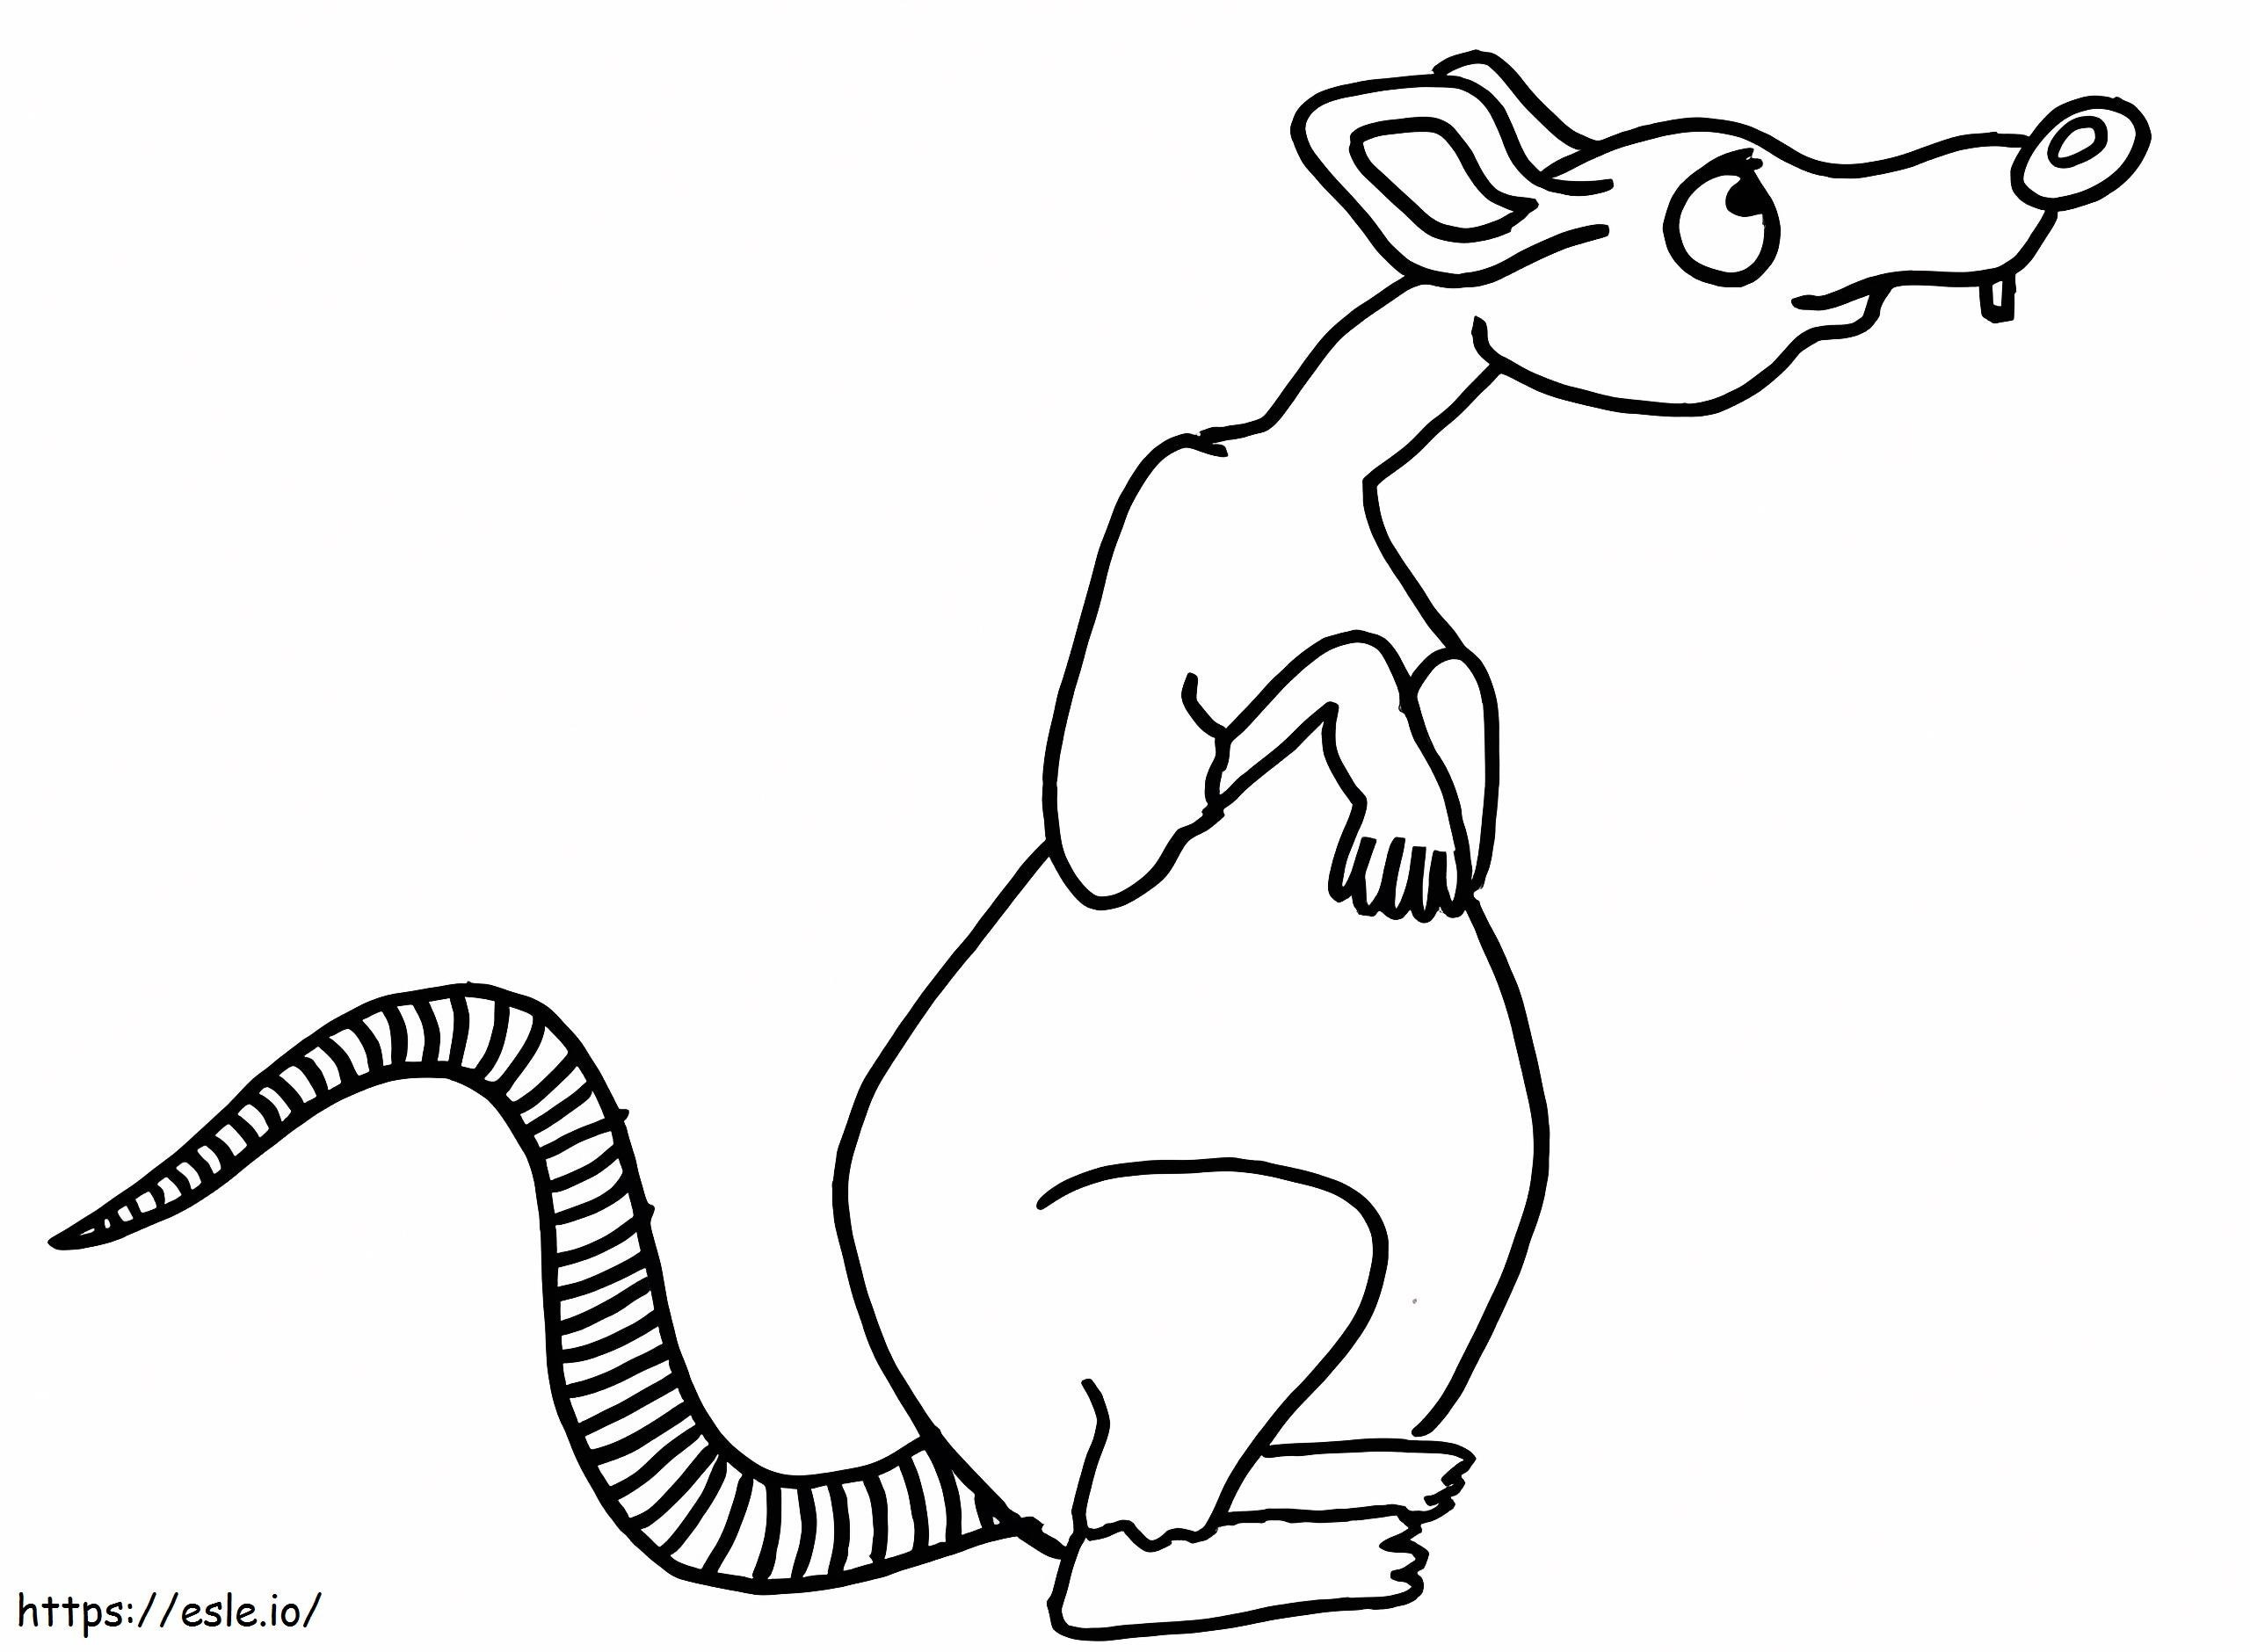 Big Rat coloring page